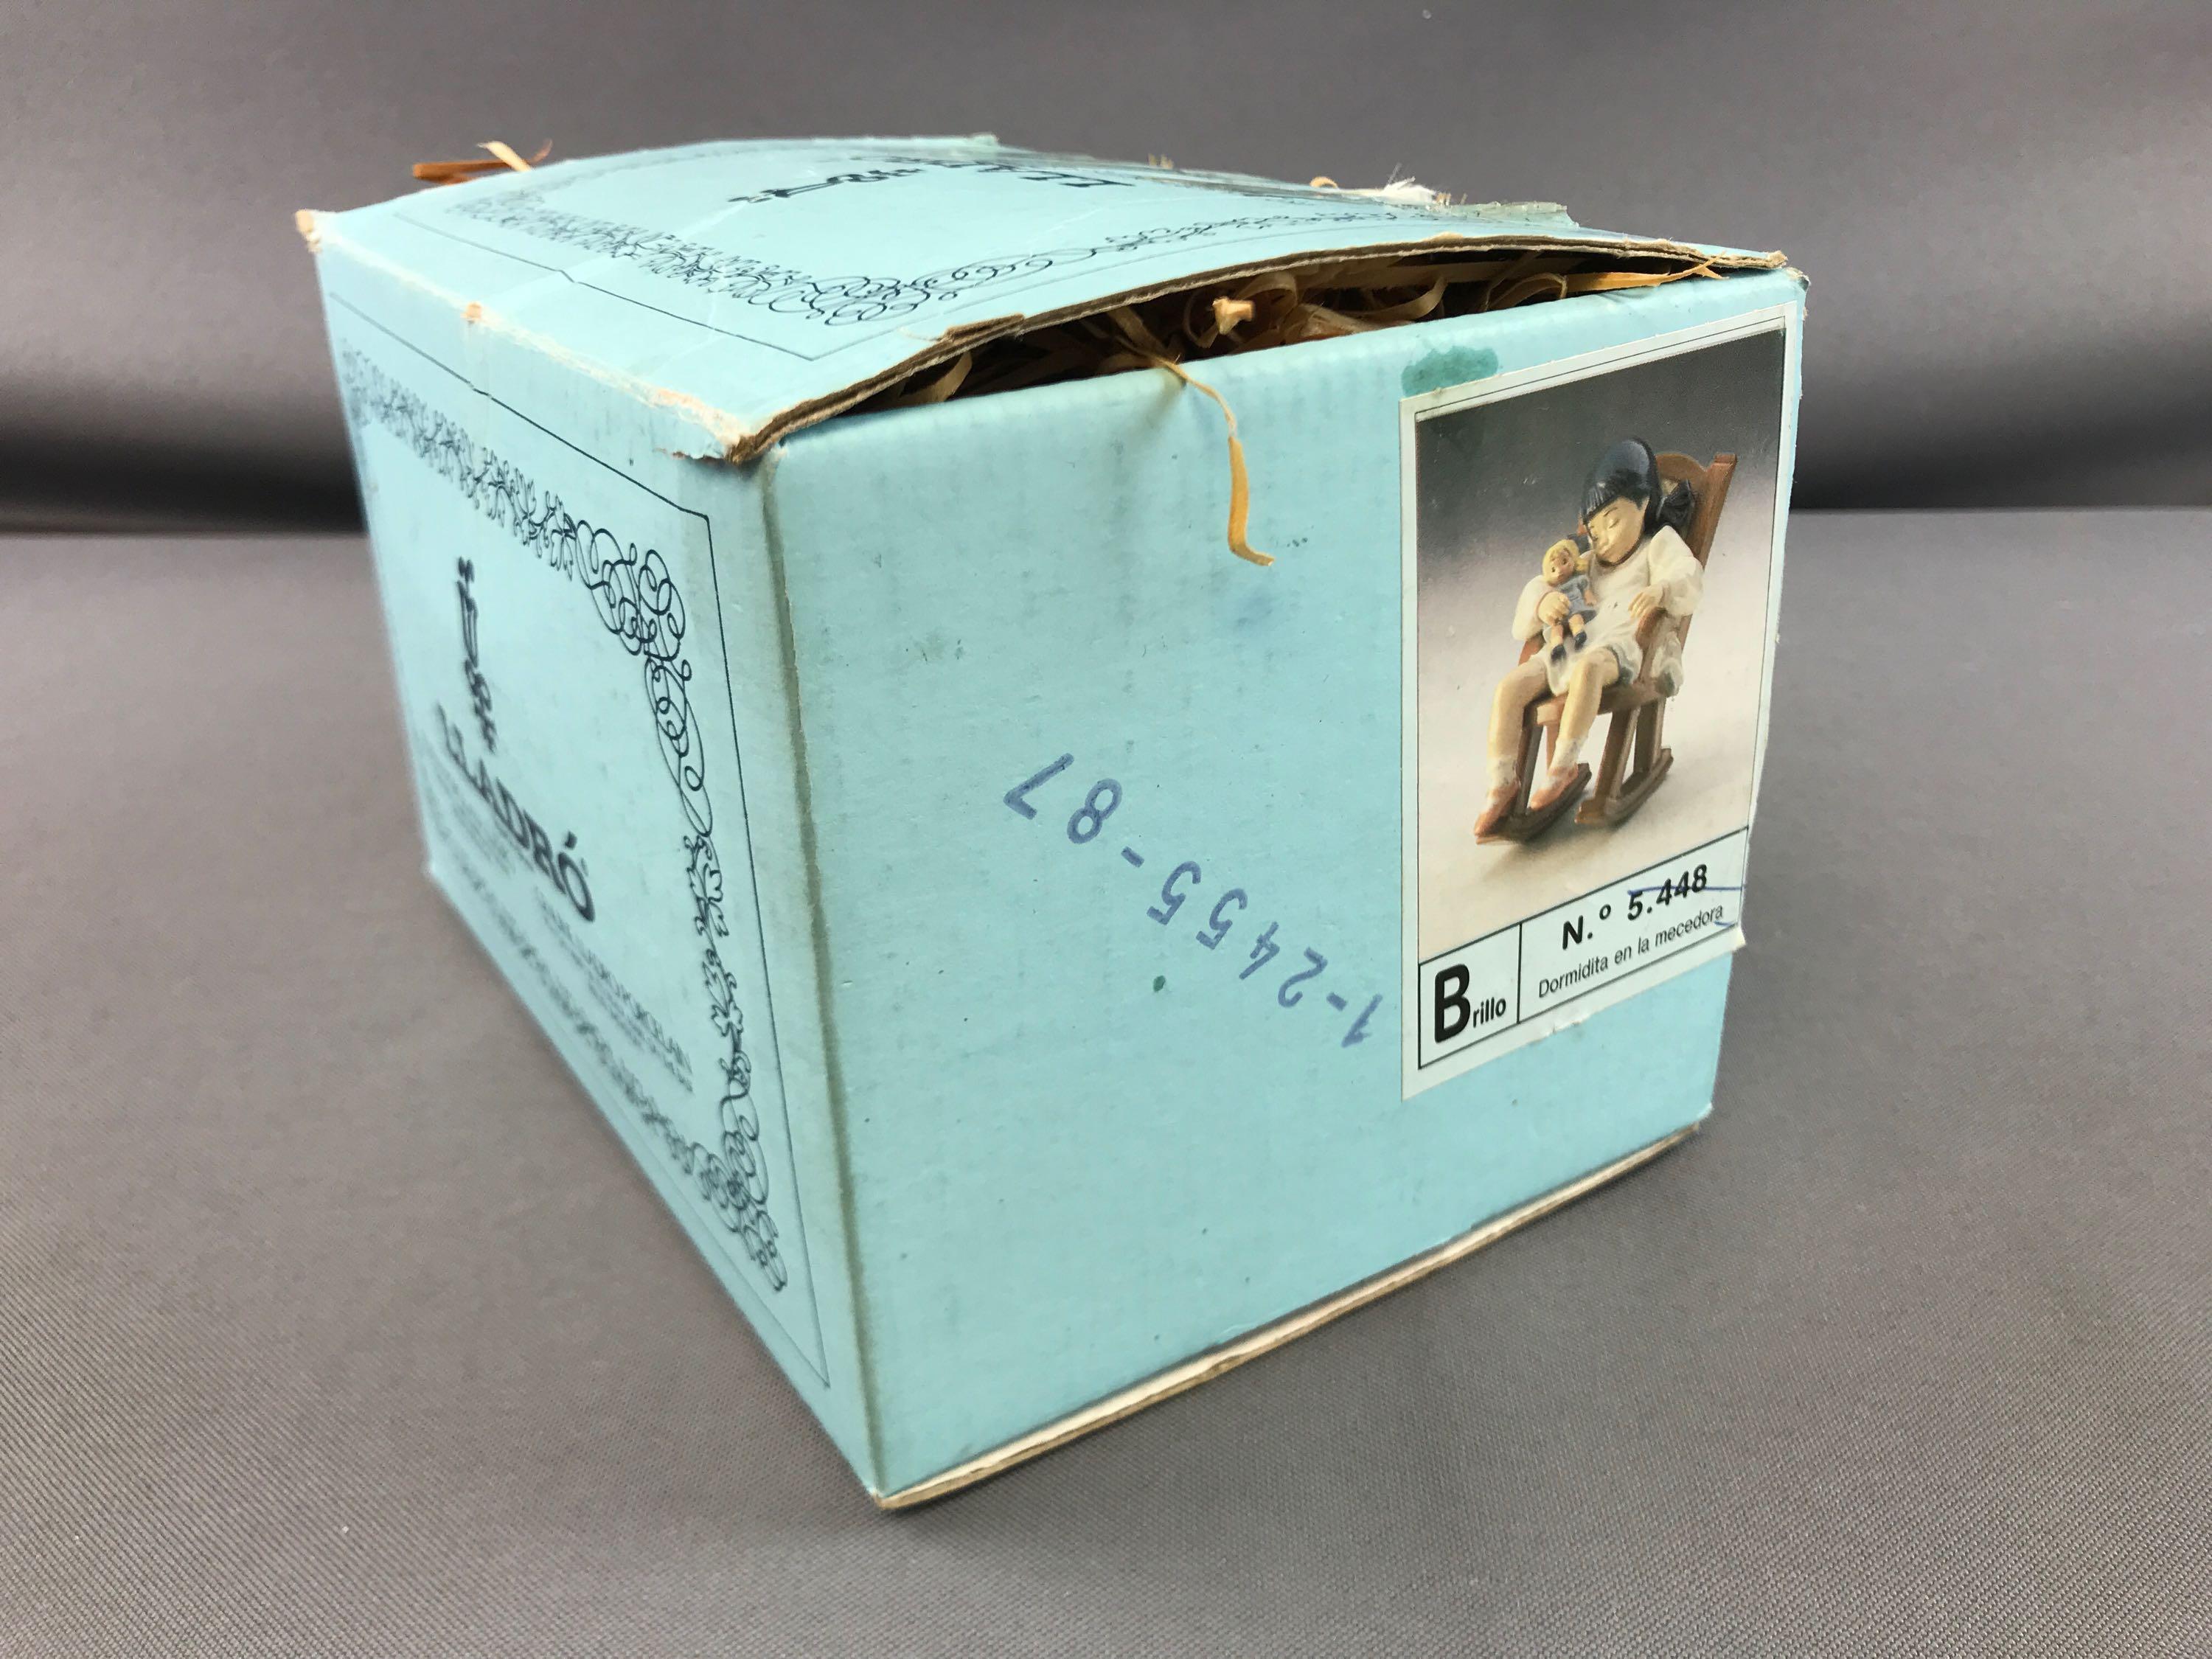 Lladro Naptime figurine in original box